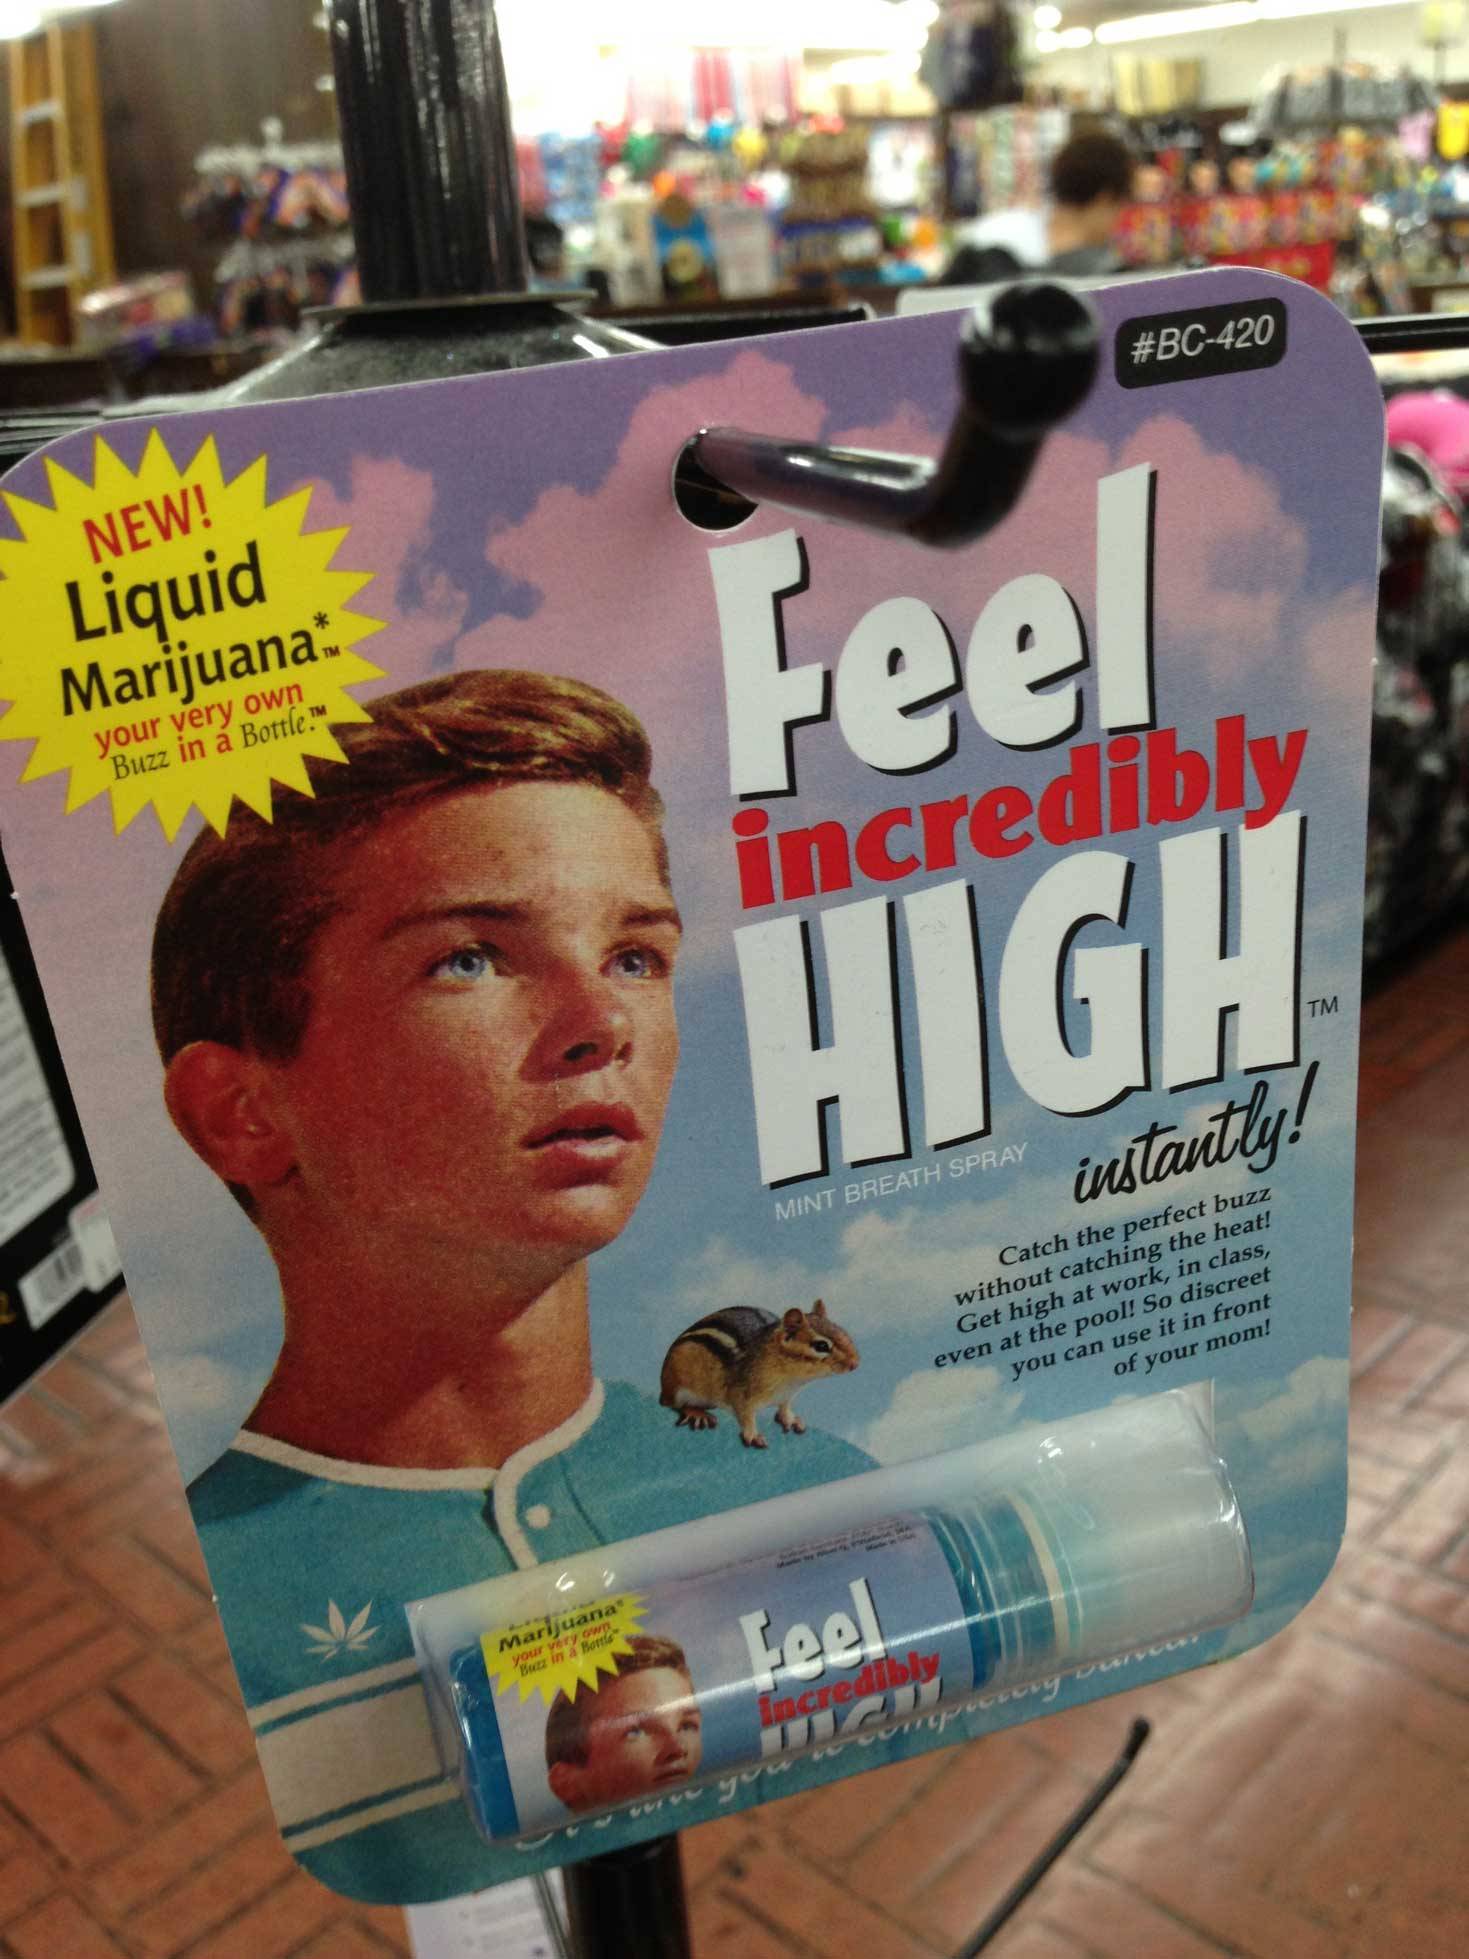 “Liquid Marijuana*” mint breath spray